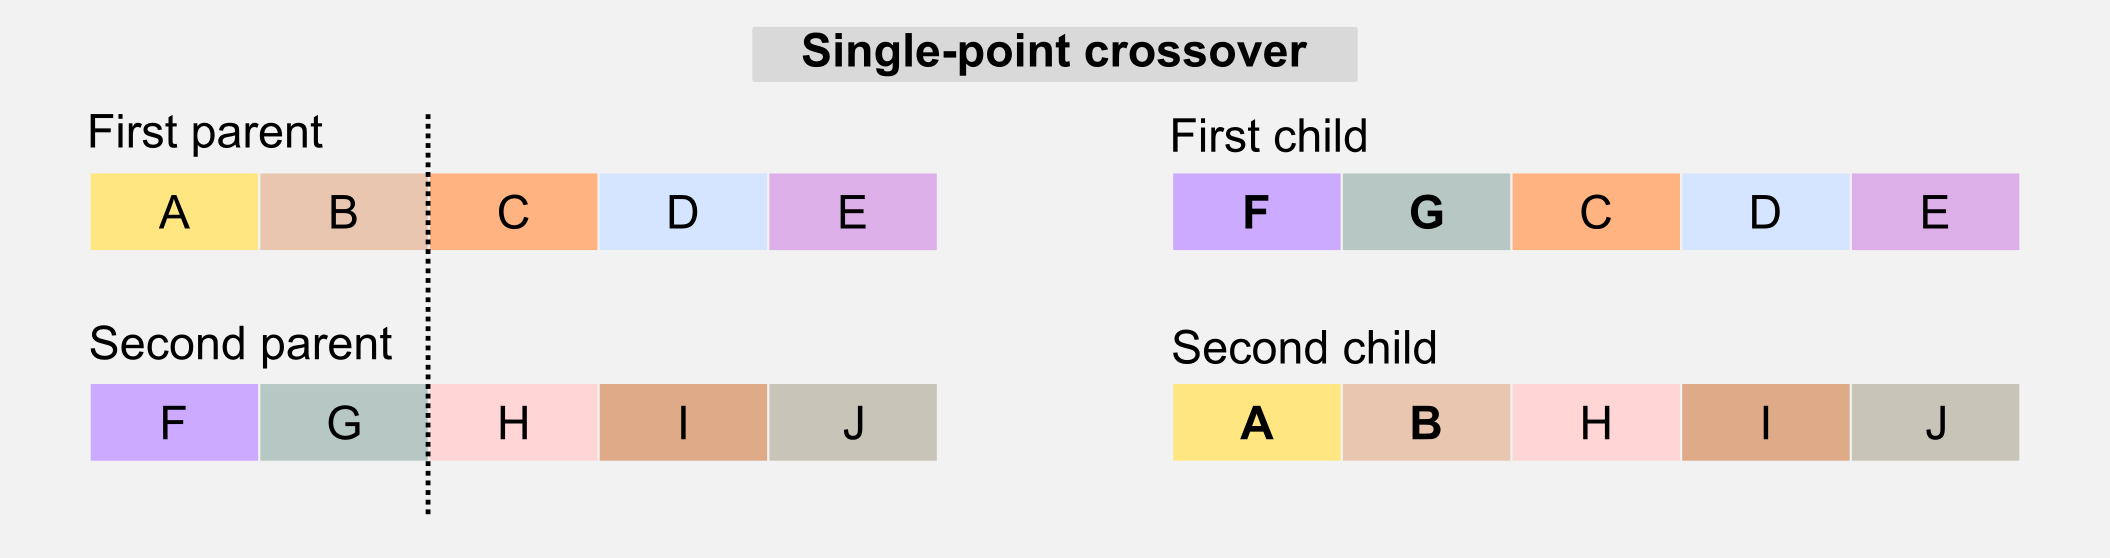 Genetic Algorithms Single Point Crossover